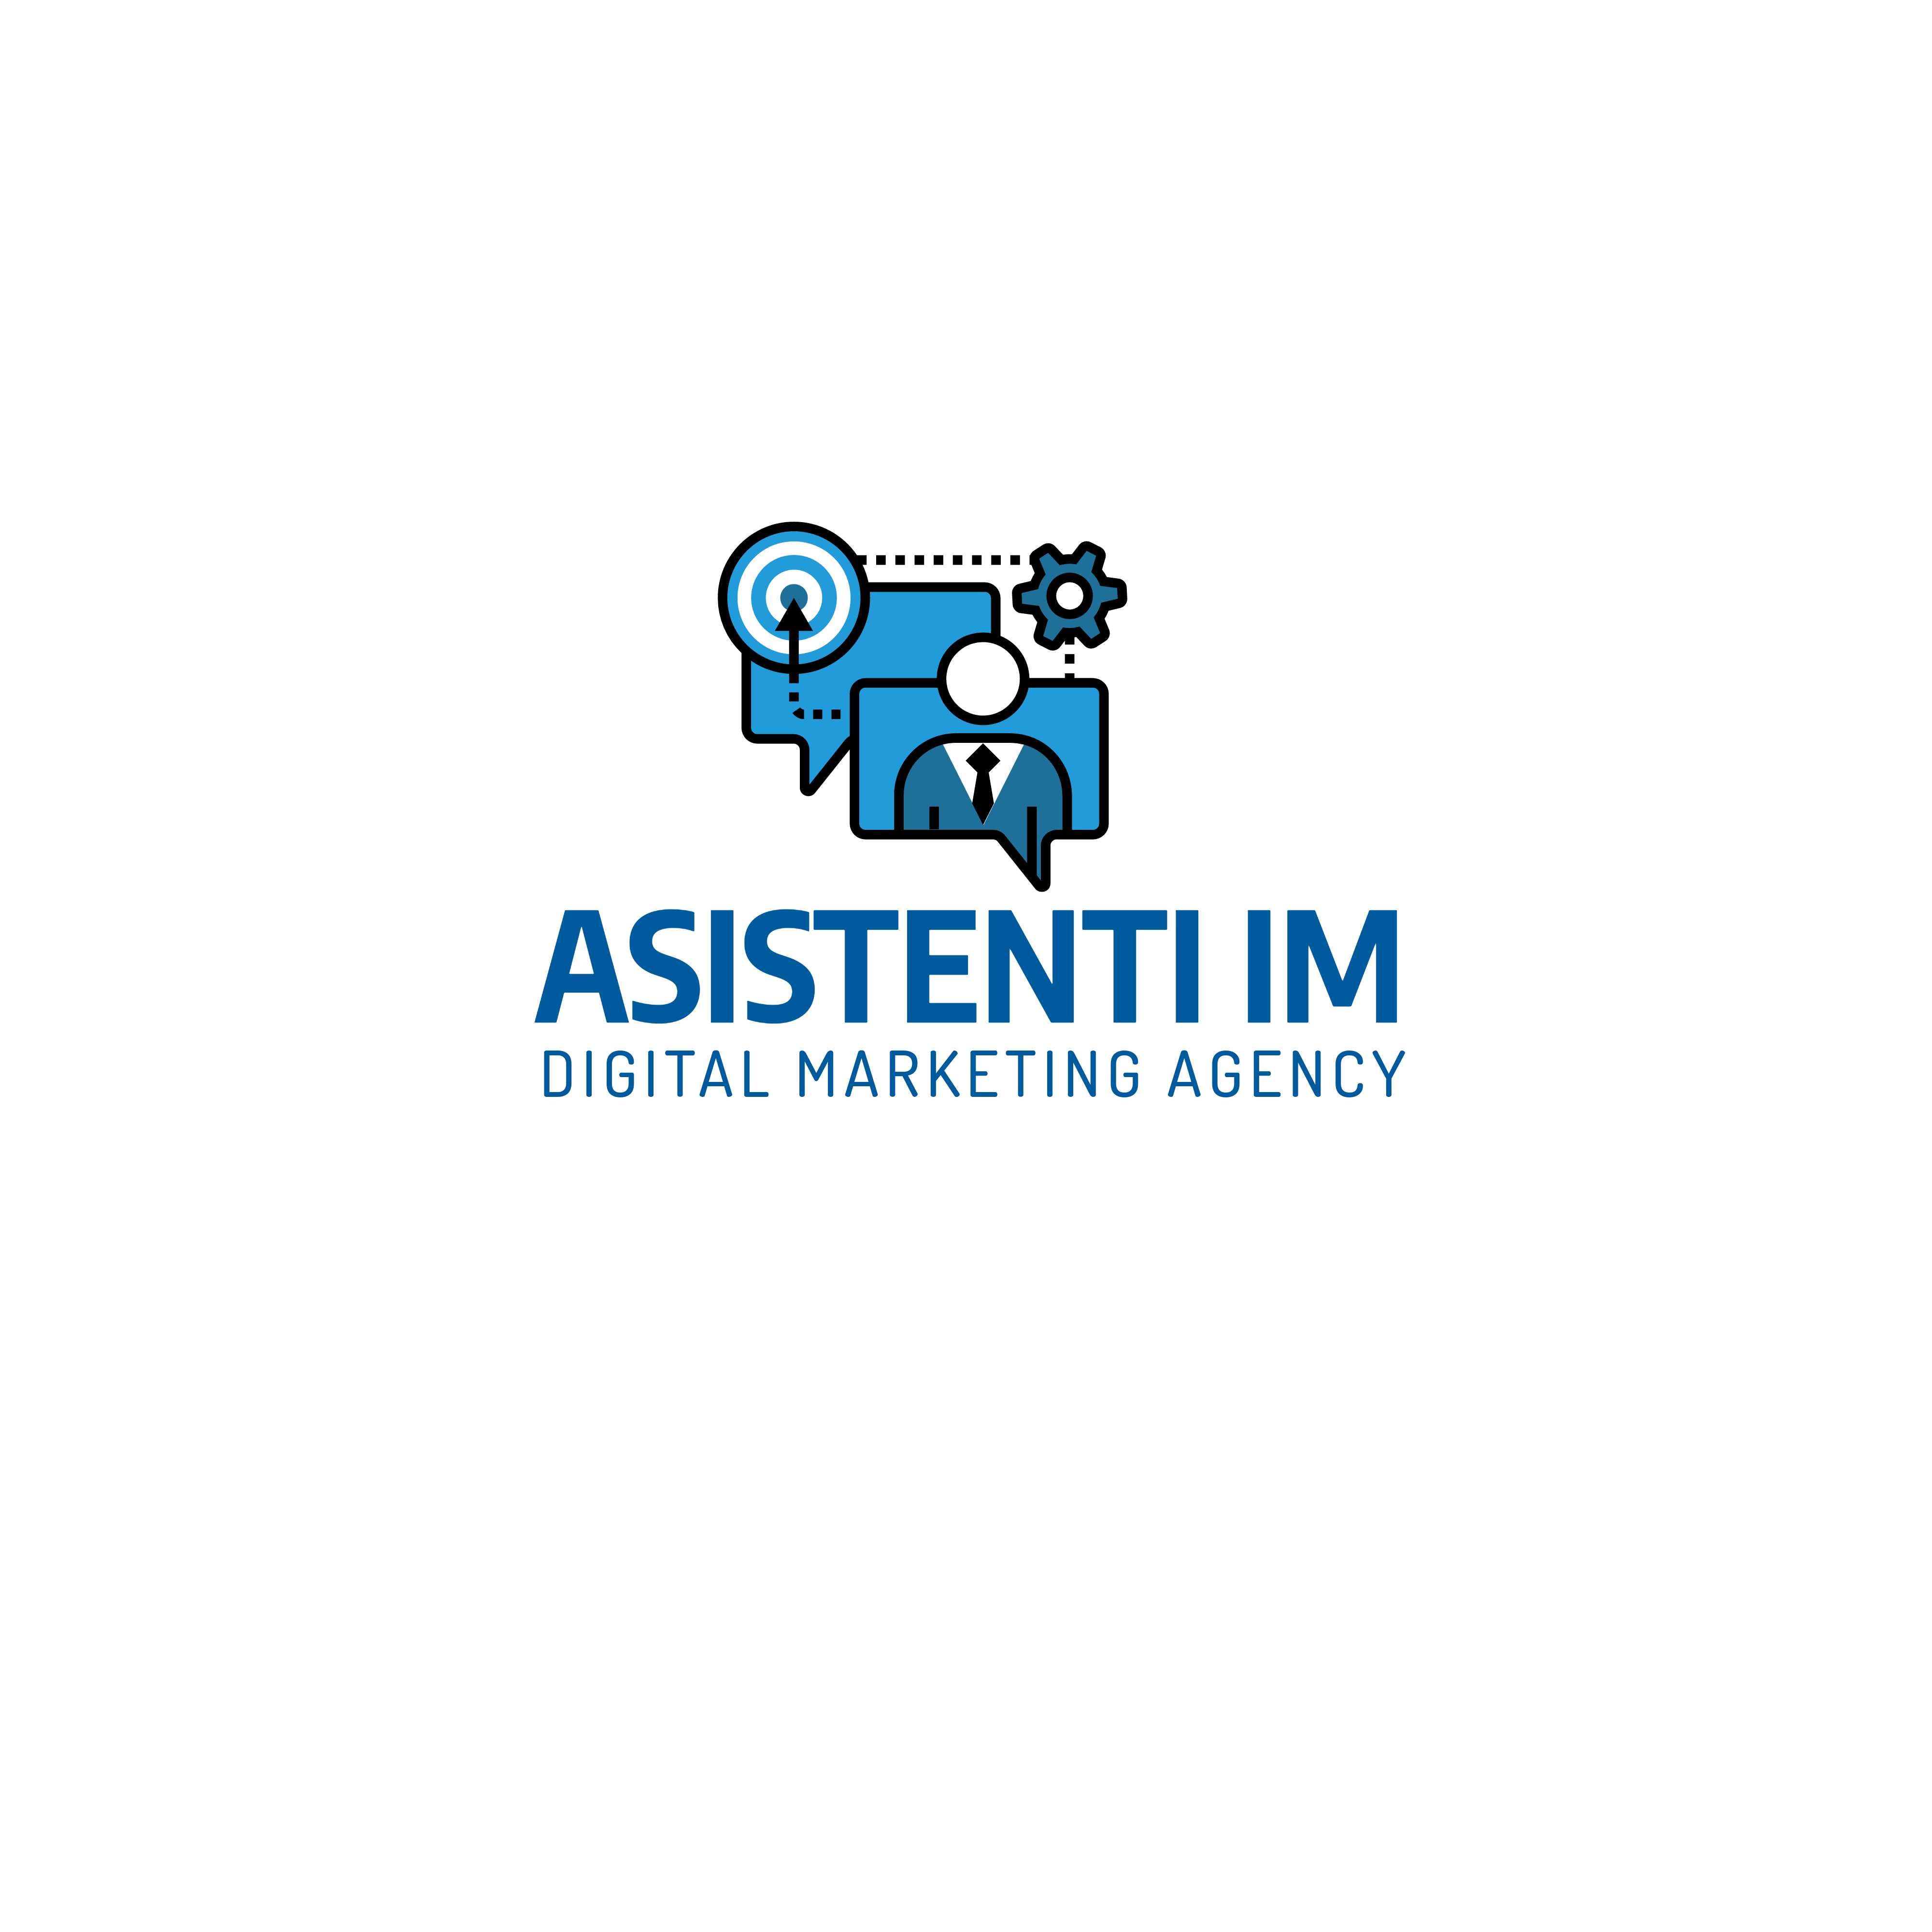 Asistenti.im, a chatbot developer